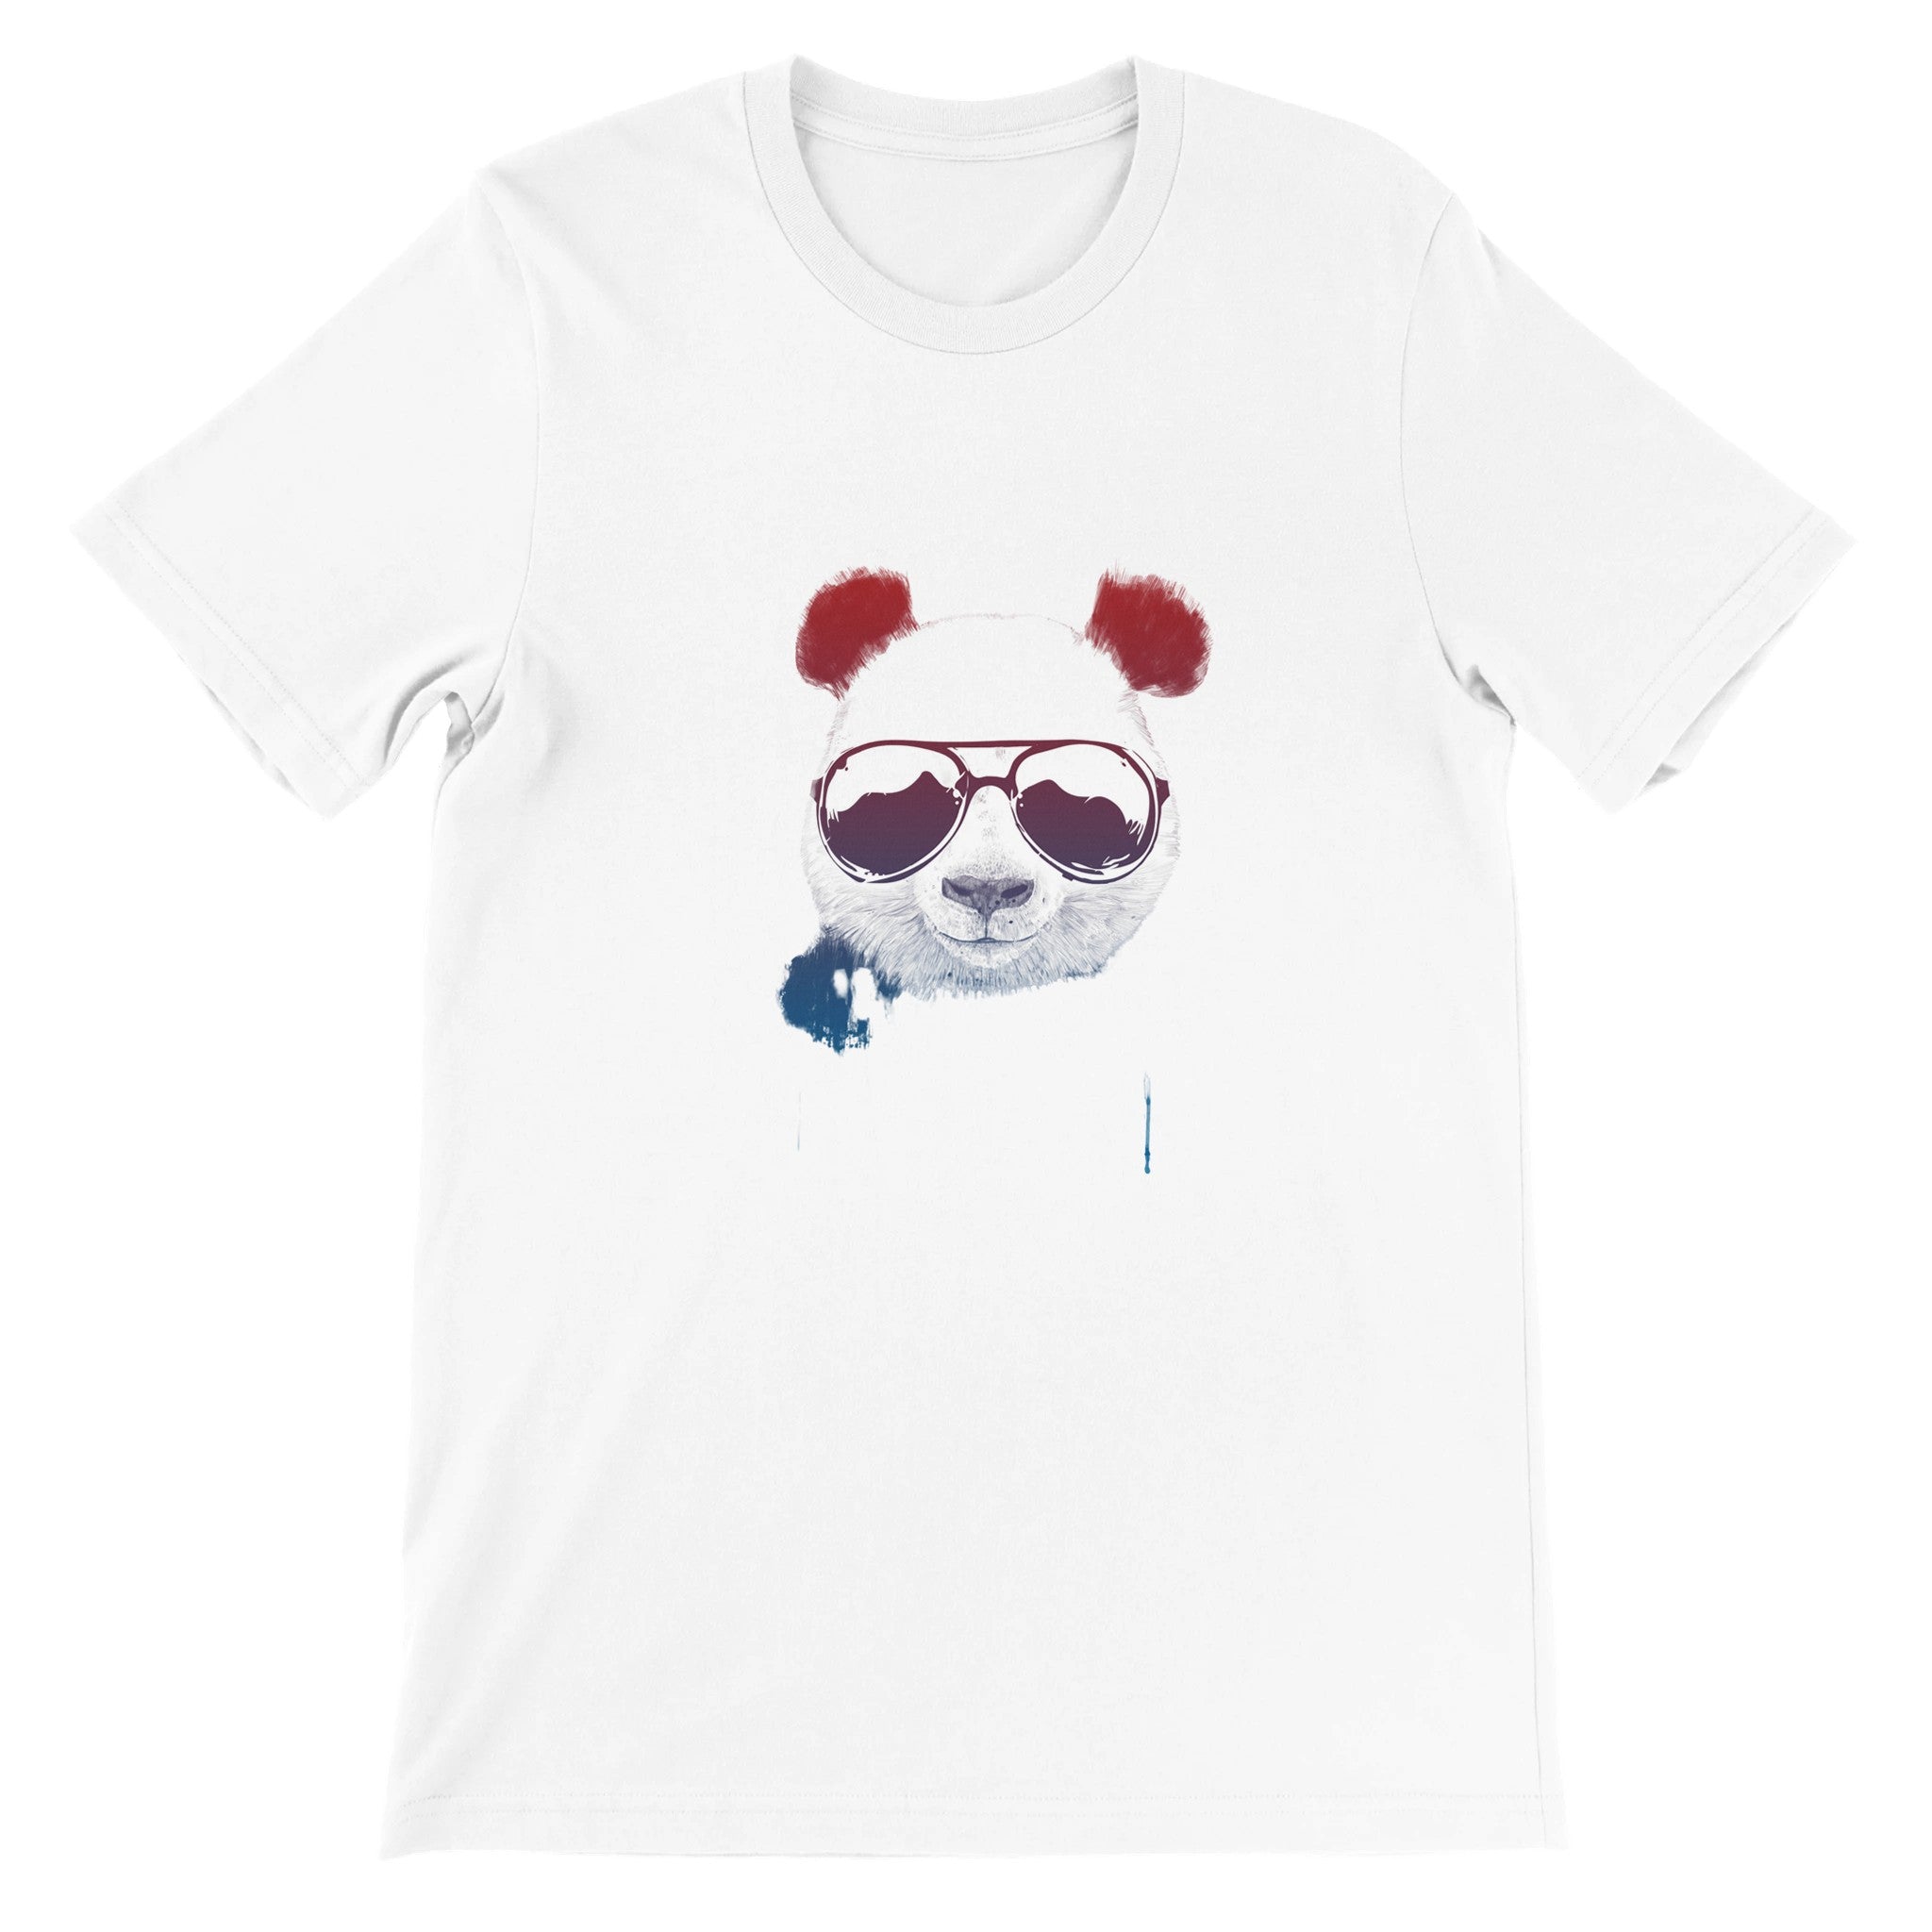 Stay Cool Crewneck T-shirt - Optimalprint